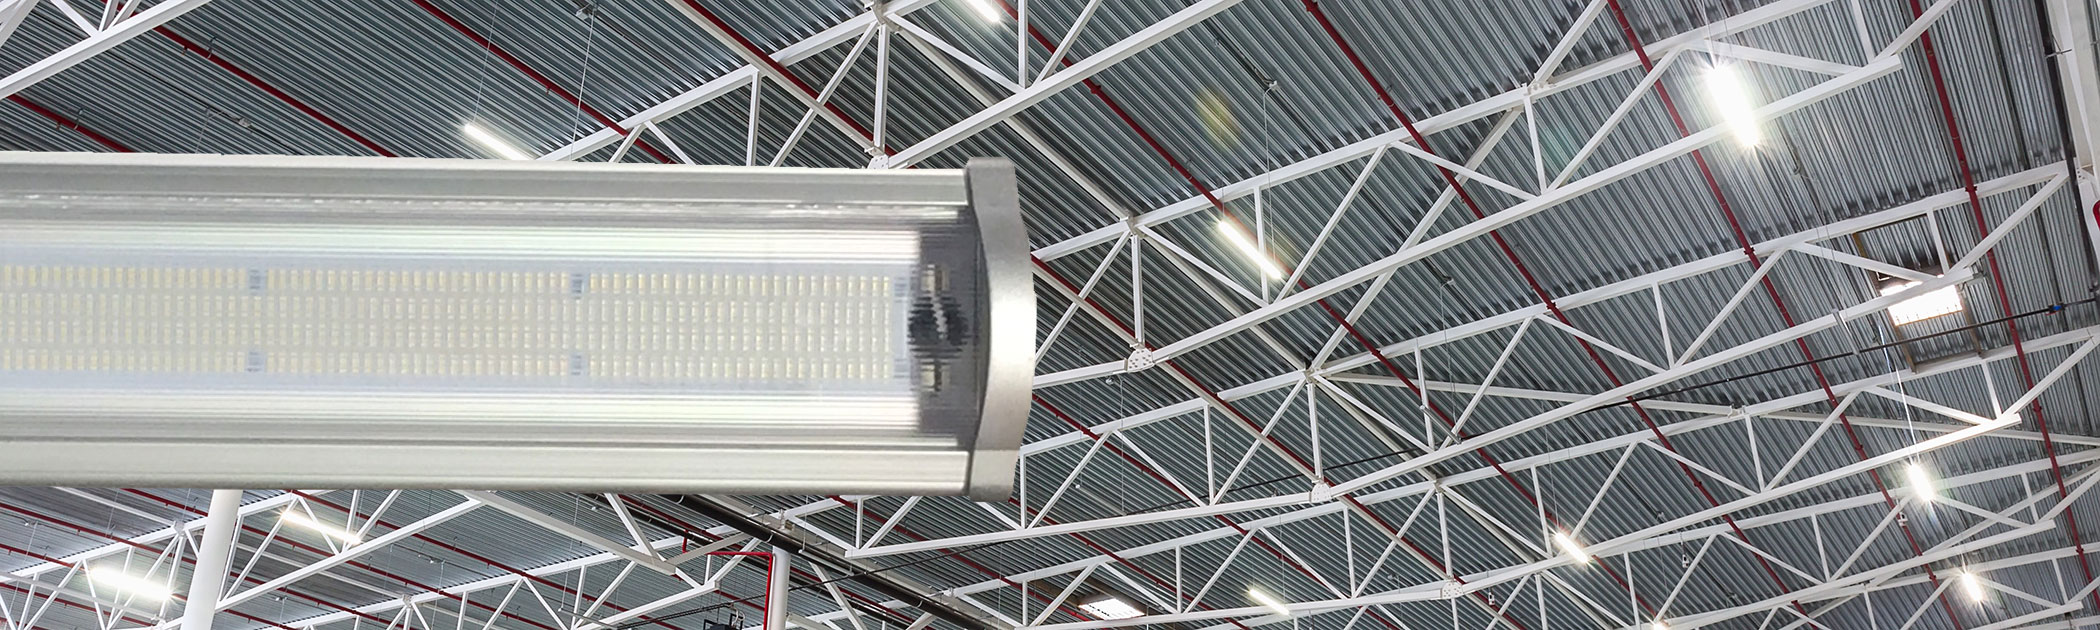 industrial led lighting